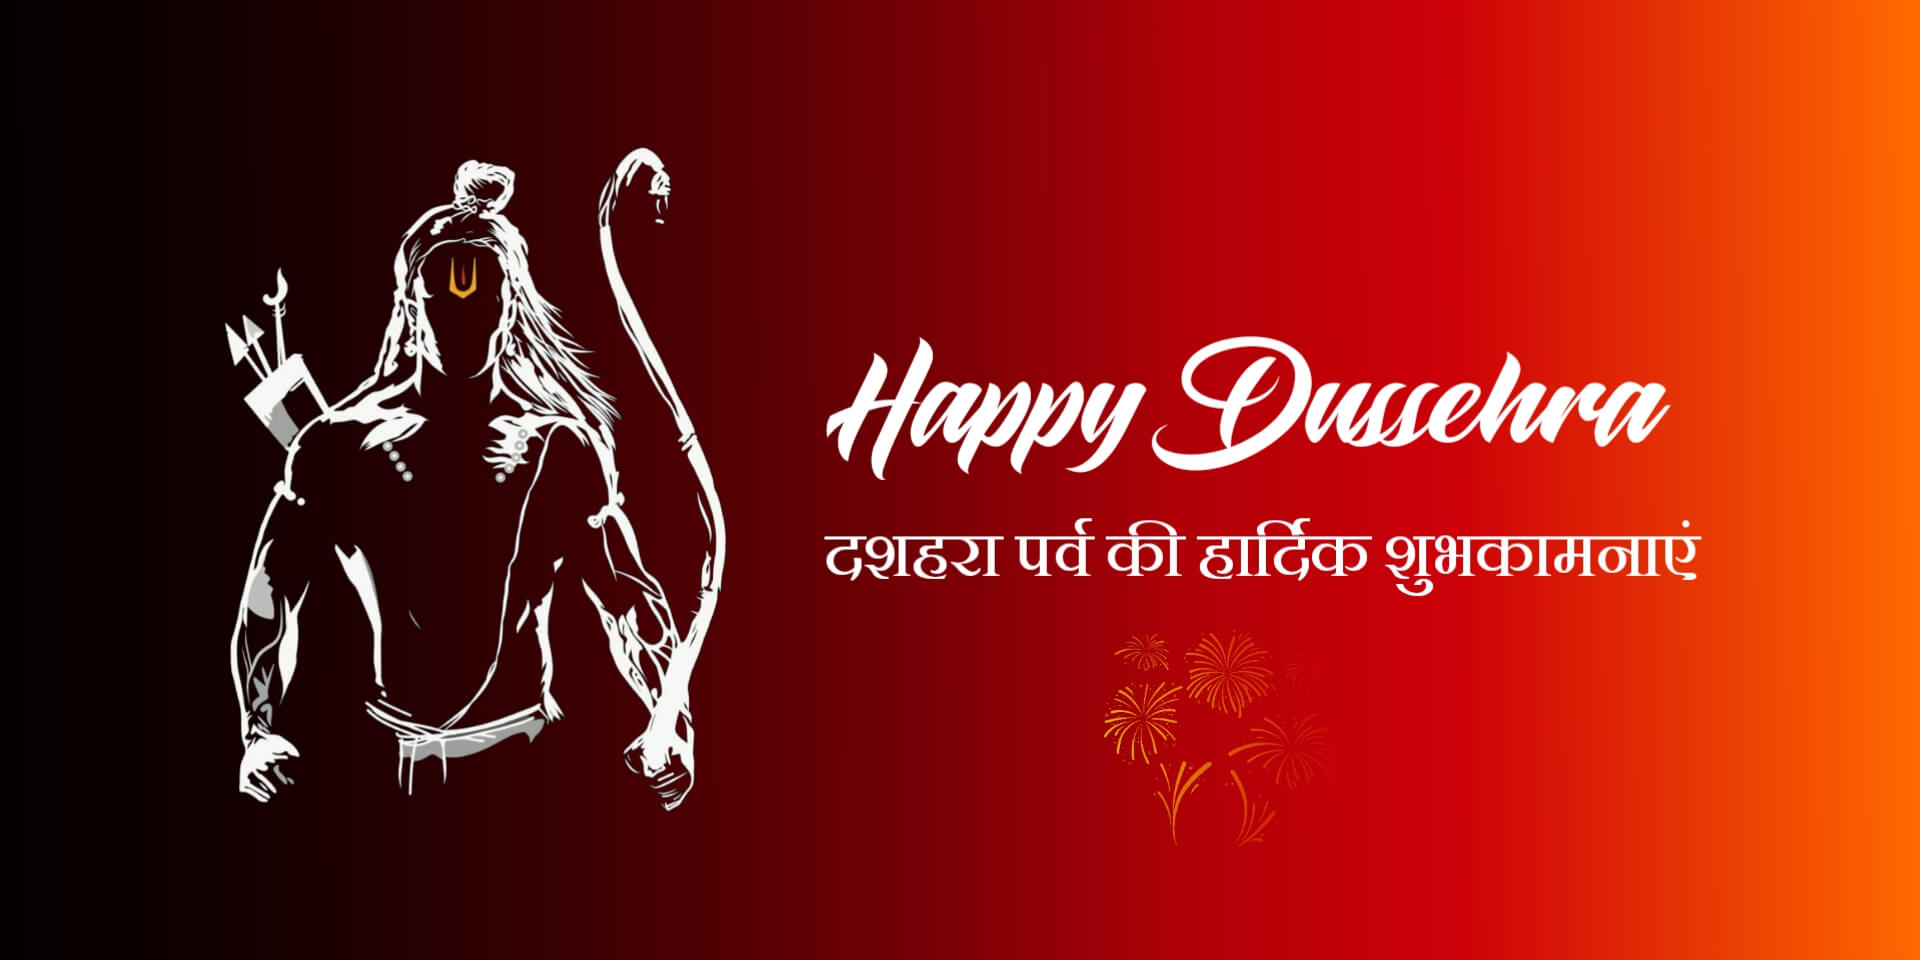 Dussehra Hindi wishes 2021 : Dussehra Hindi wishes, quotes, greetings